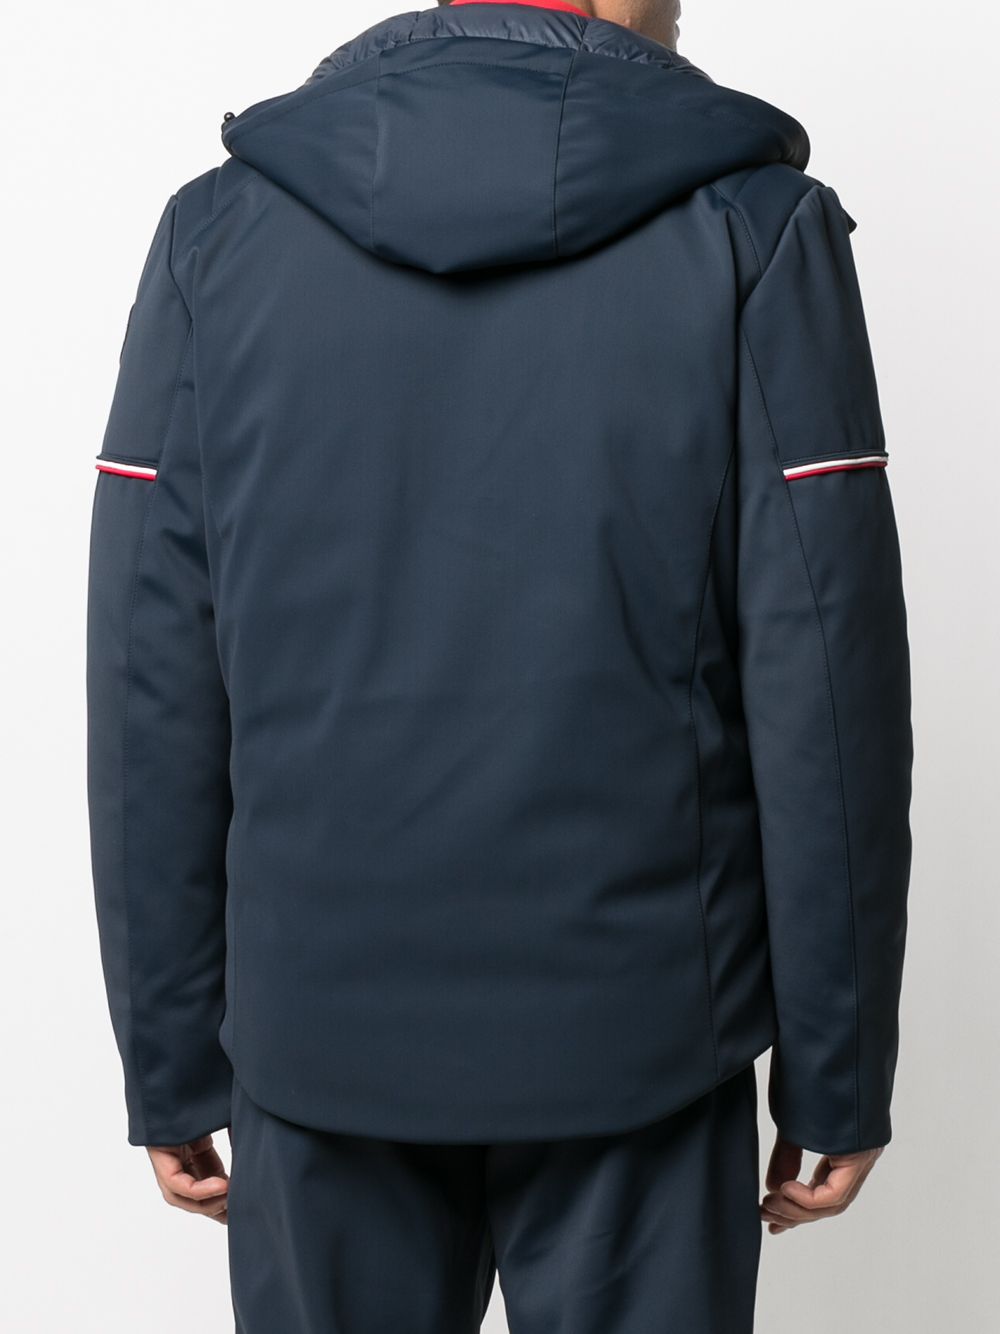 фото Vuarnet лыжная куртка pratello с капюшоном